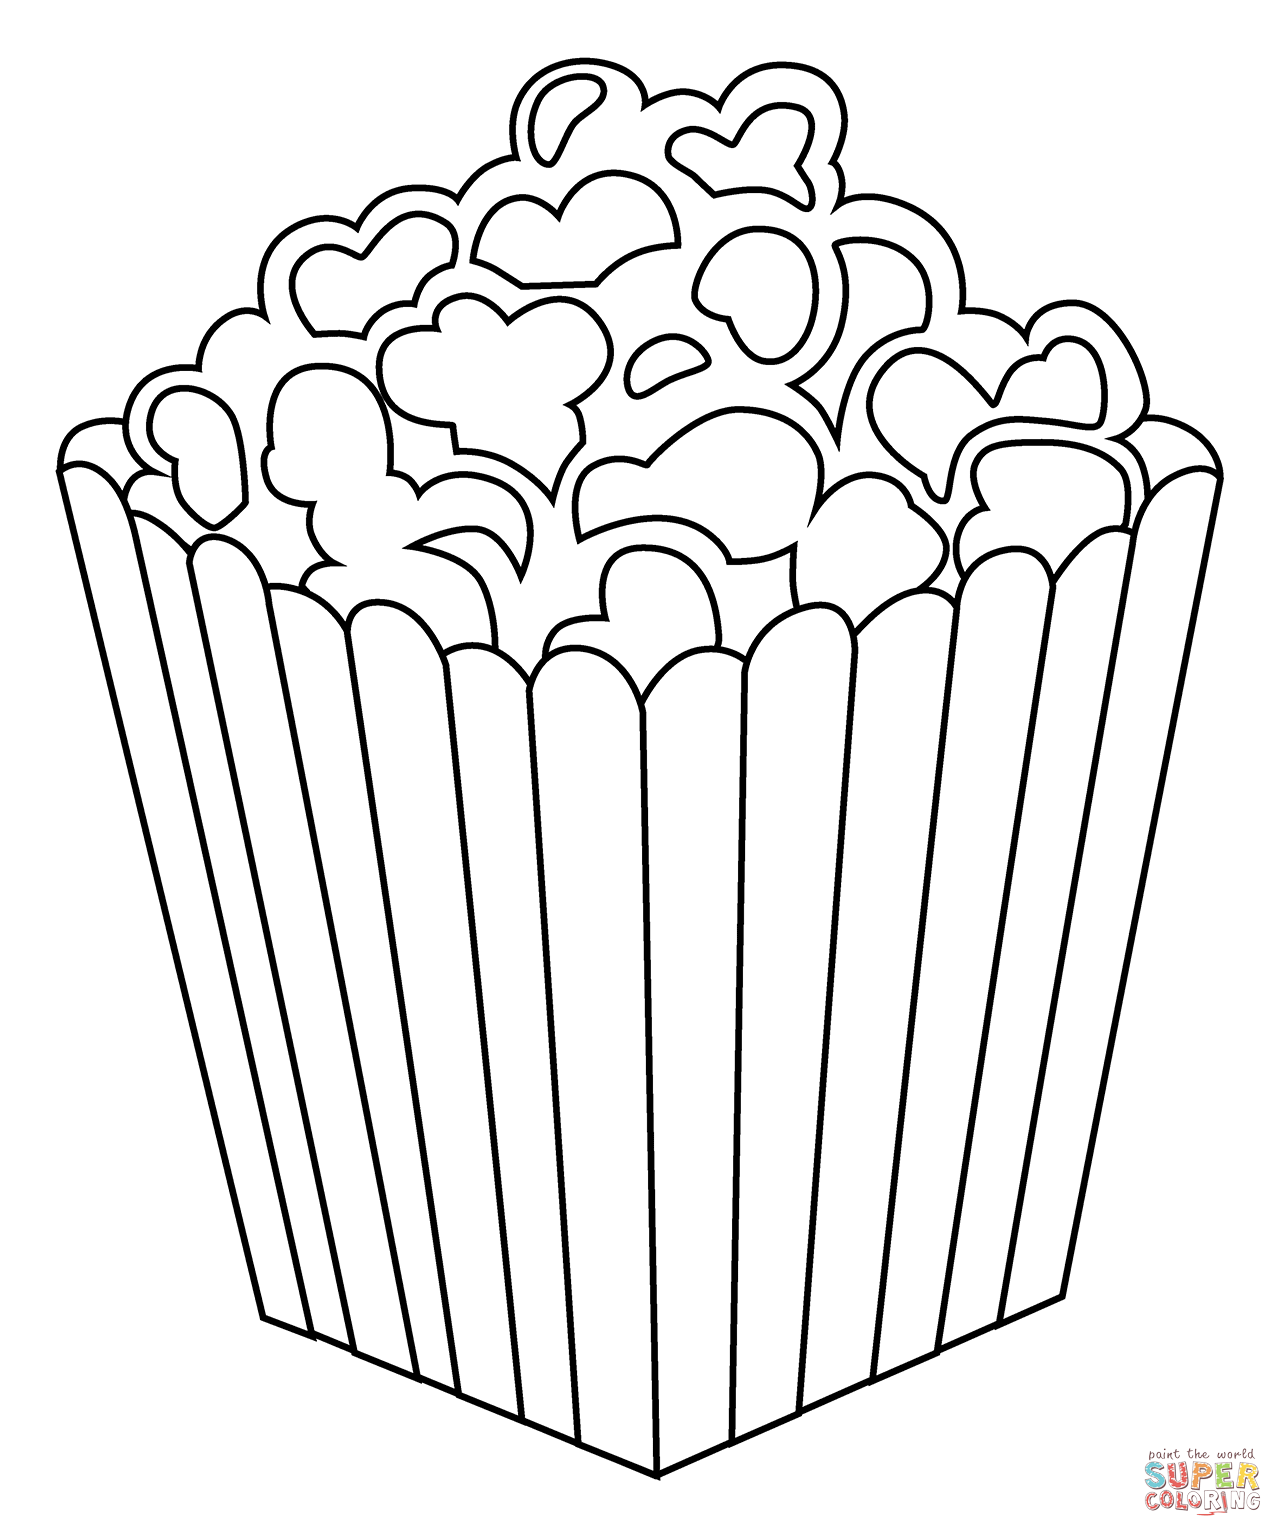 Popcorn emoji coloring page free printable coloring pages